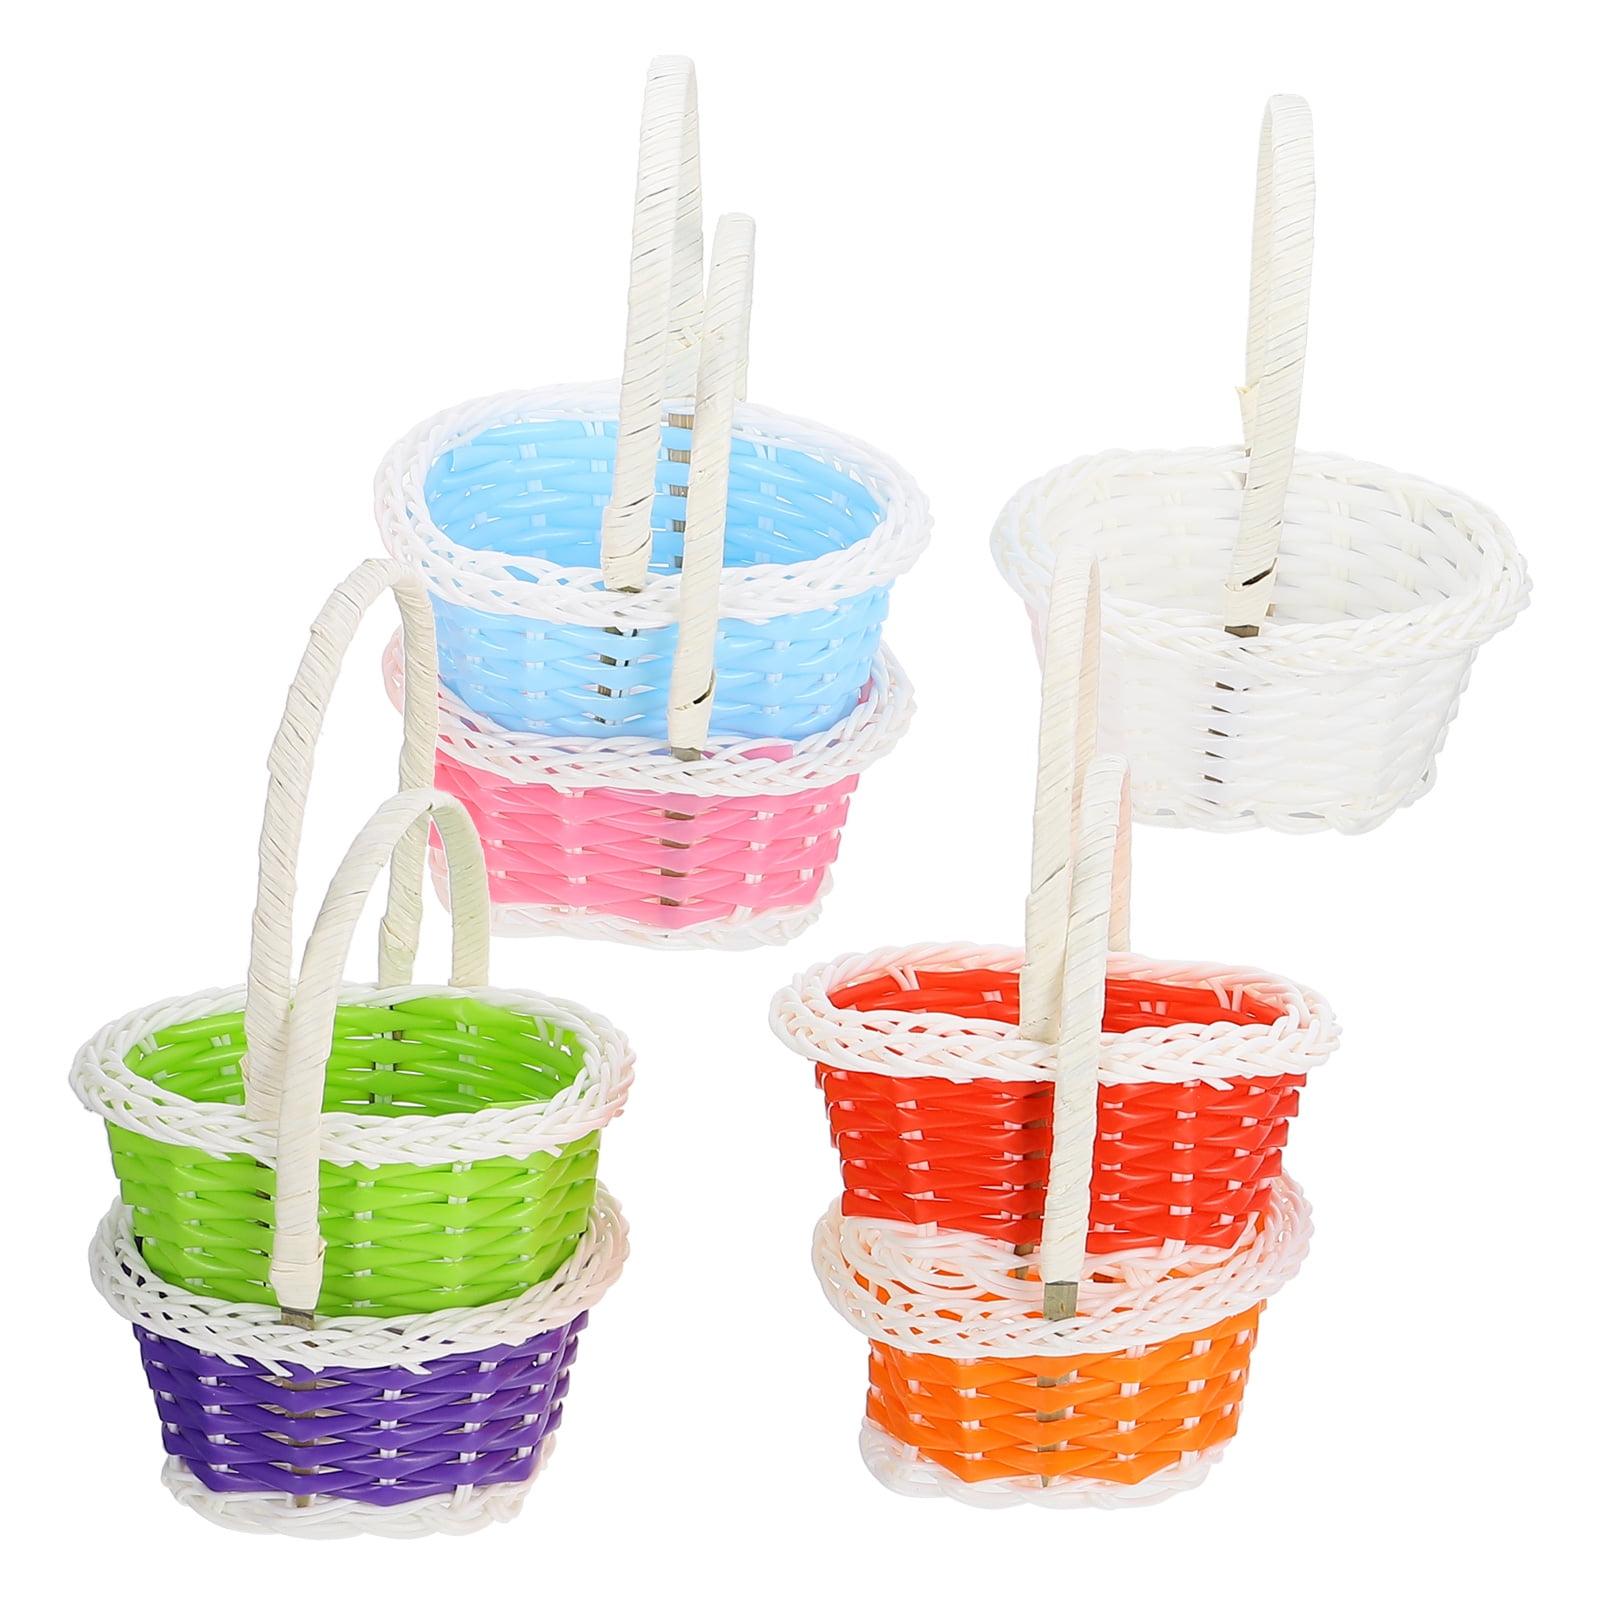 Etereauty 7 Pcs Plastic Storage Baskets Practical Food Baskets Lovely Craft Baskets